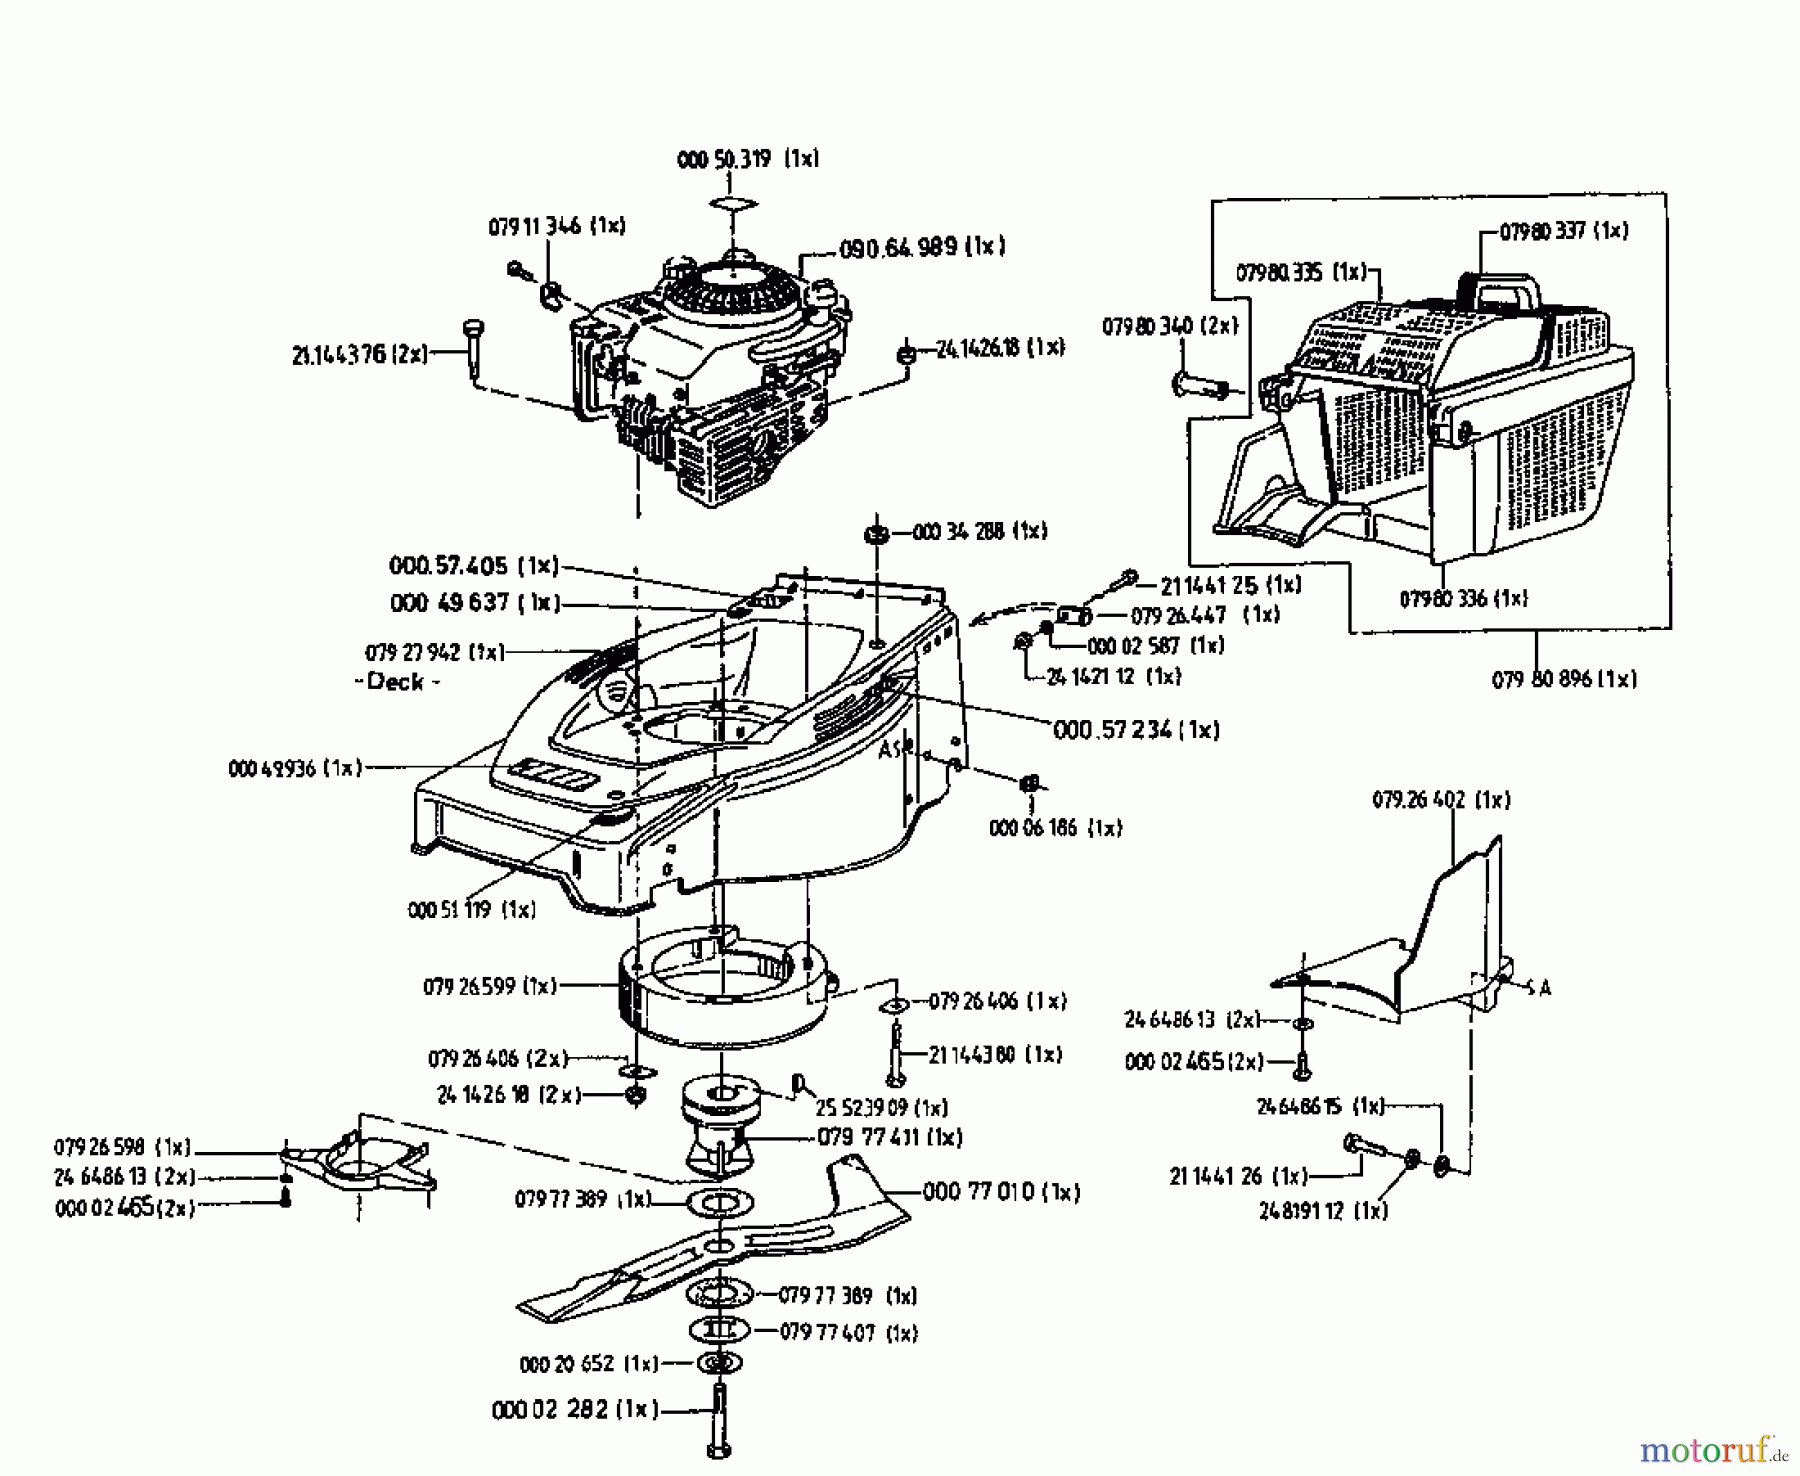  Gutbrod Petrol mower self propelled HB 48 R 02815.07  (1996) Basic machine